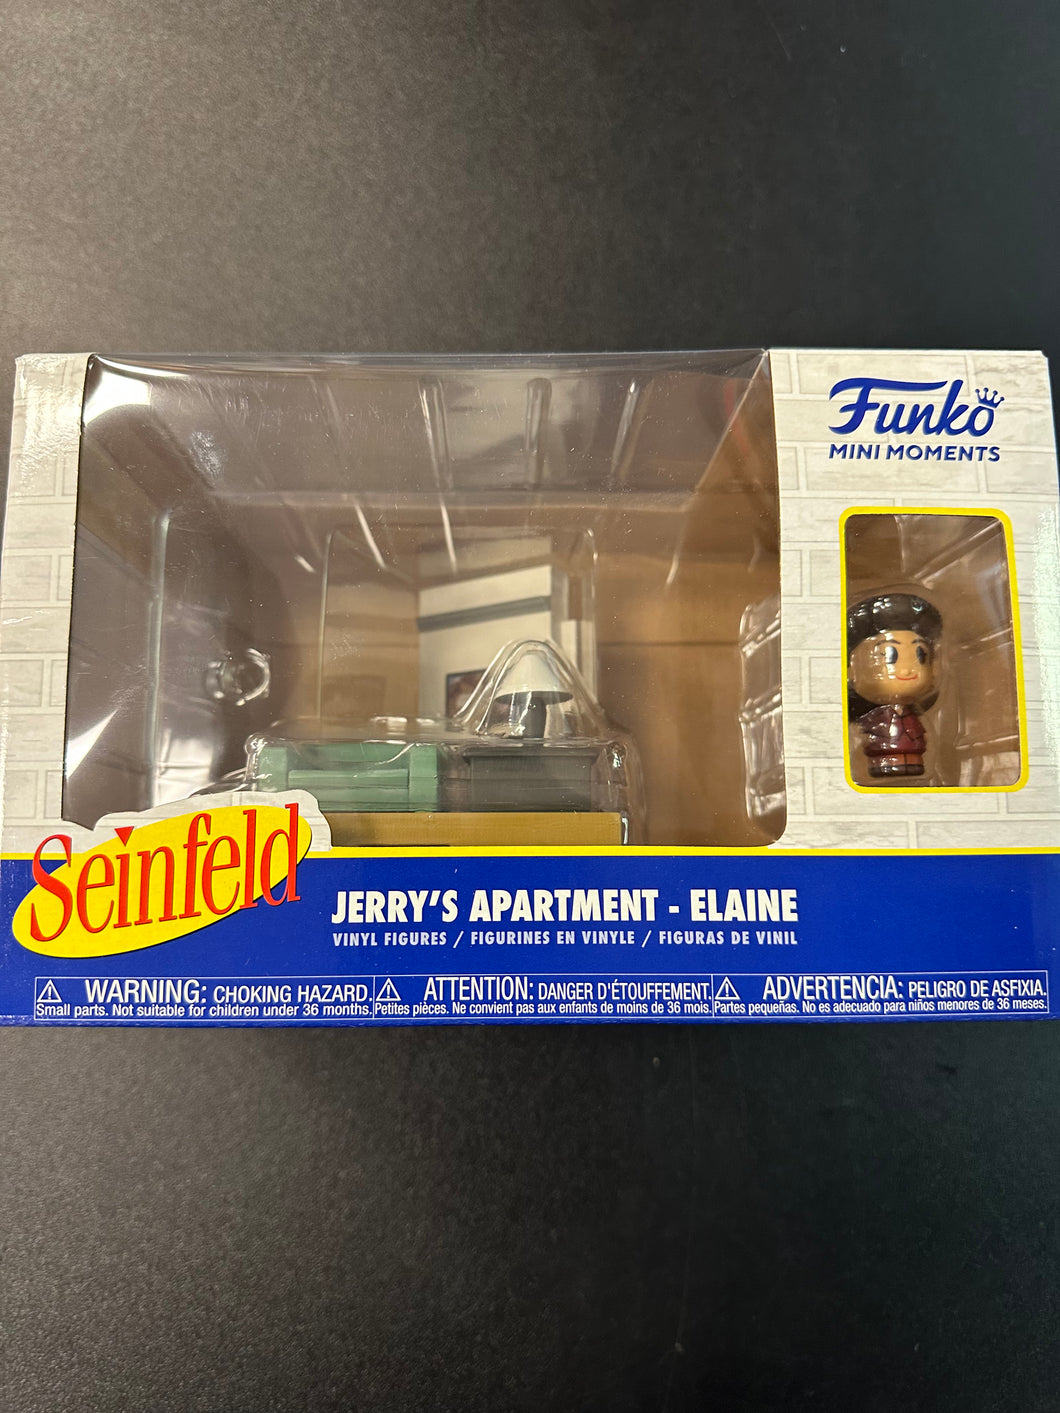 Funko Mini Moments Seinfeld Jerry’s Apartment- Elaine